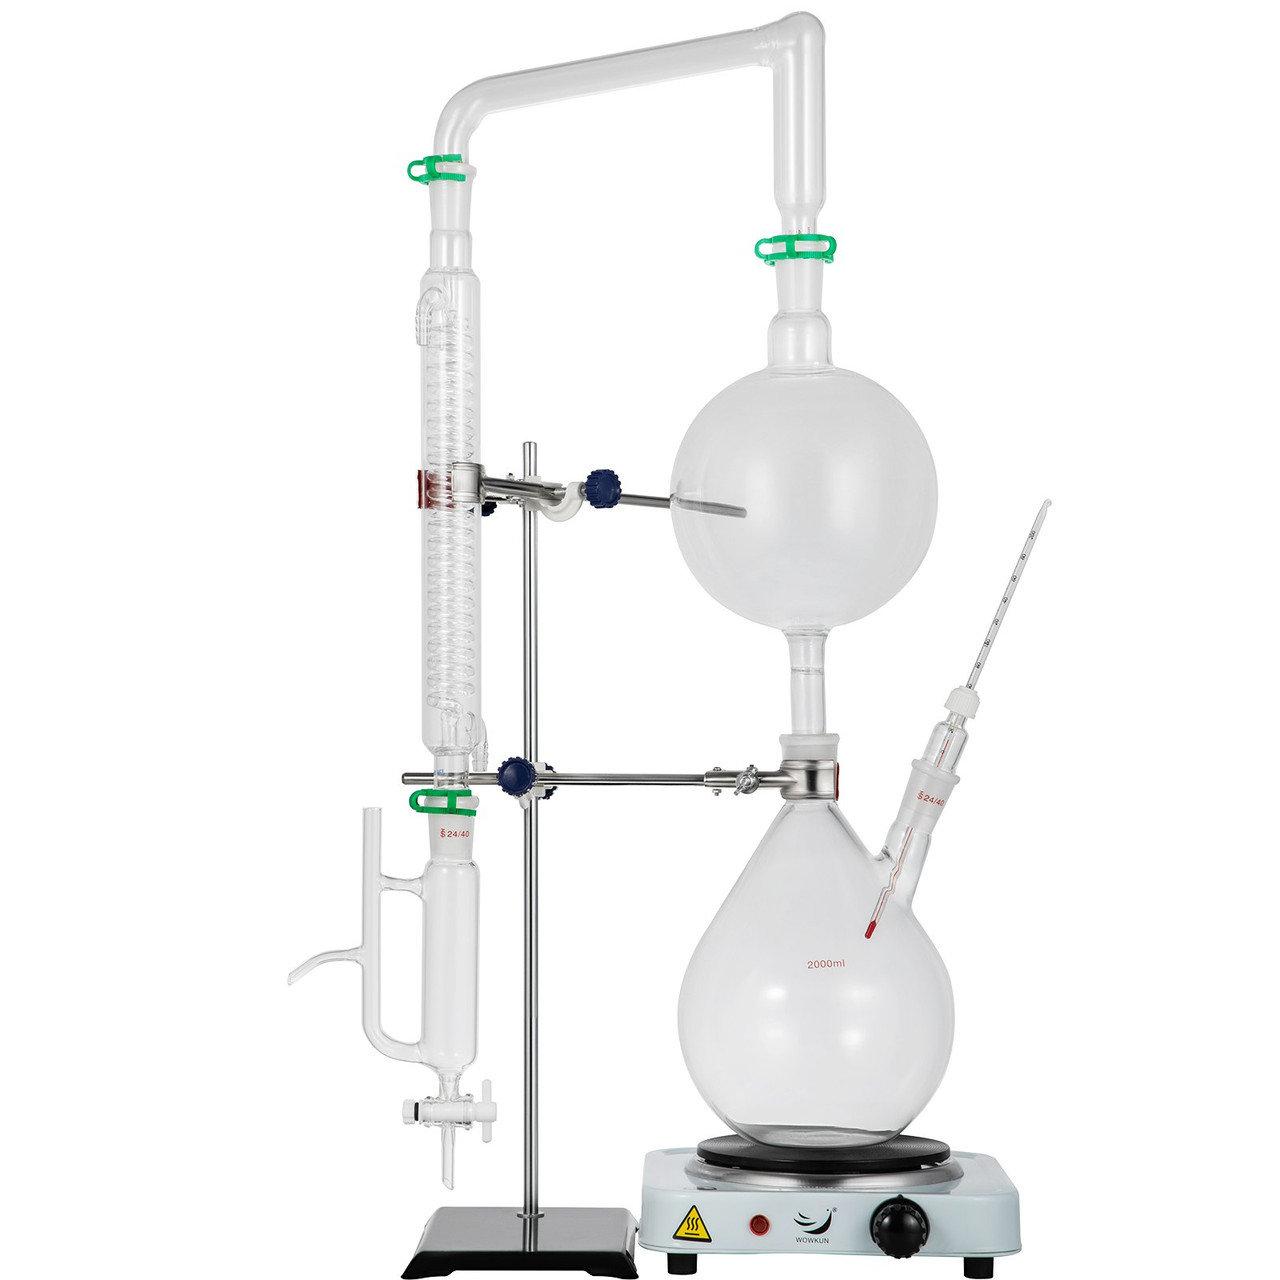 VEVOR 2L Essential Oil Distillation Apparatus Lab Glassware Distillation Kit Water Distiller Purifier with Hot Stove Condenser S35 & 24 or 40 Joint